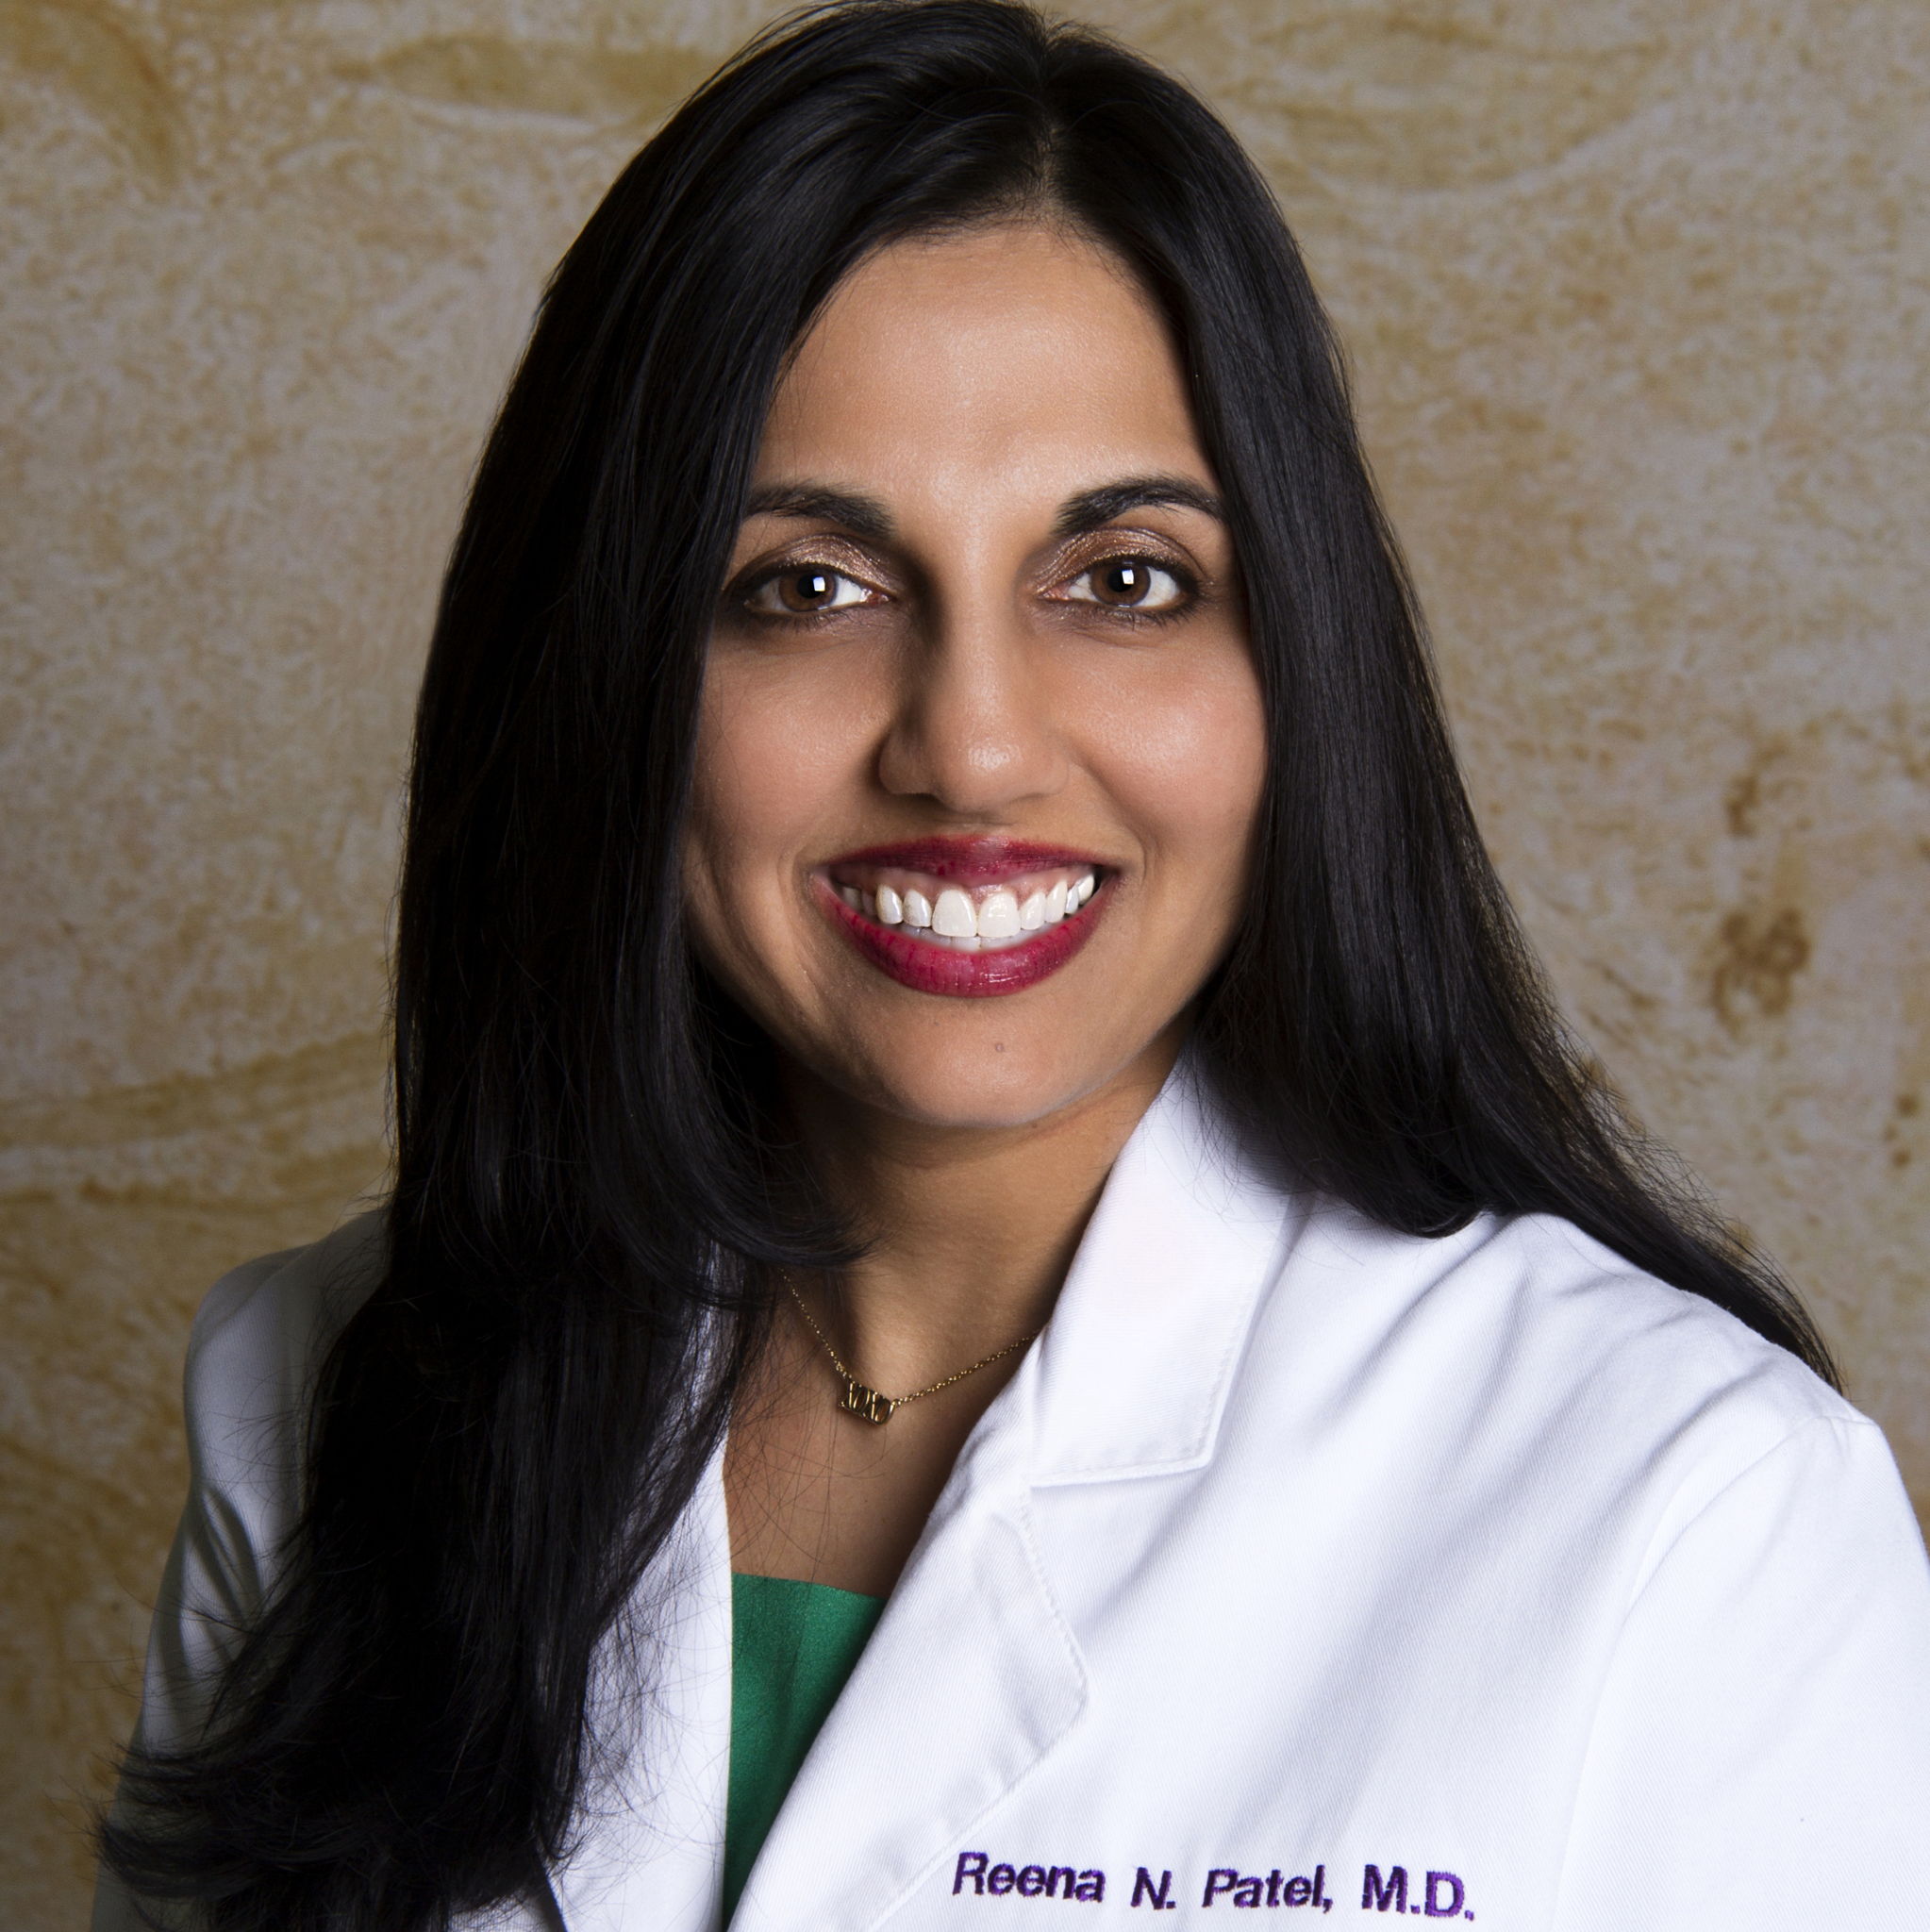 Dr. Reena N. Patel, M.D., Ophthalmologist